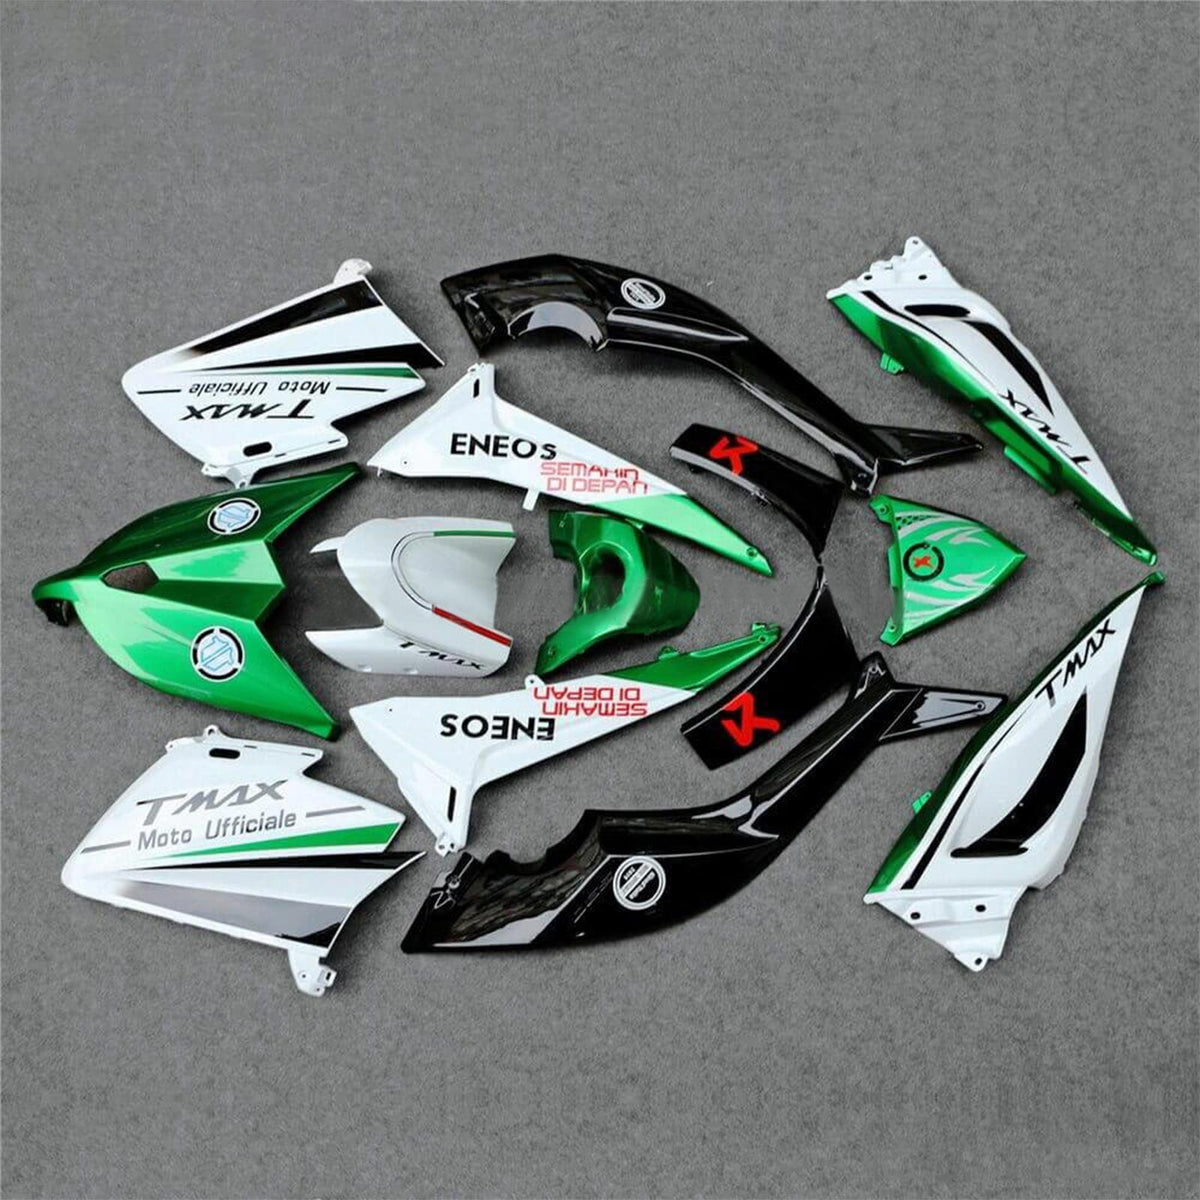 Amotopart 2012-2014 Kit carena Yamaha T-Max TMAX530 verde lucido e bianco